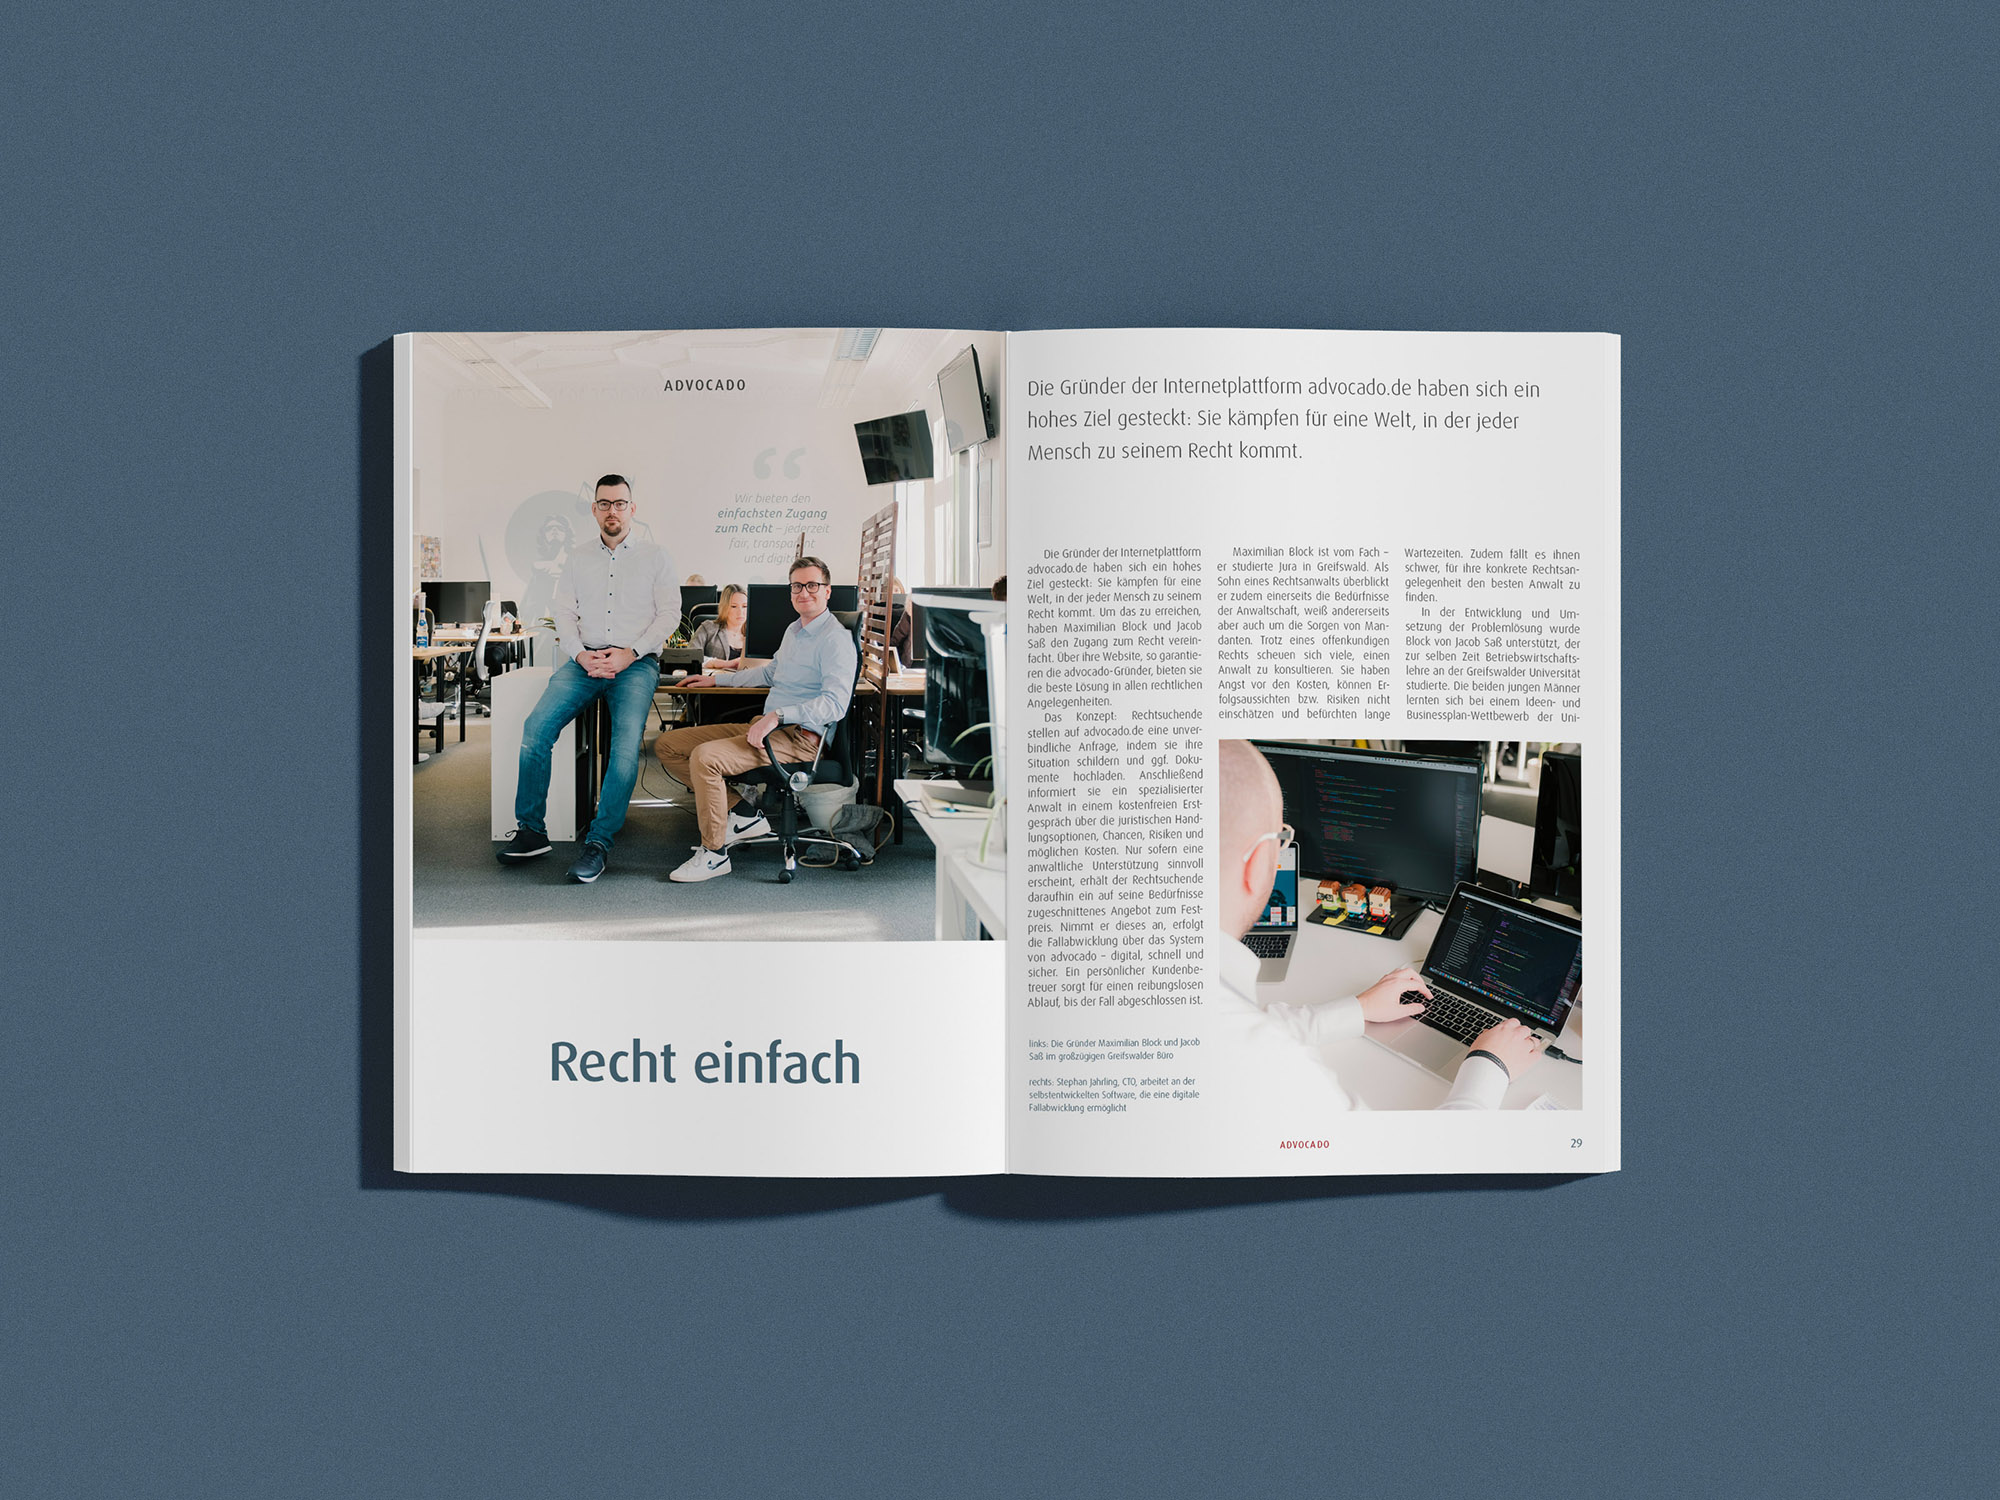 Greifswald Innovativ Magazin